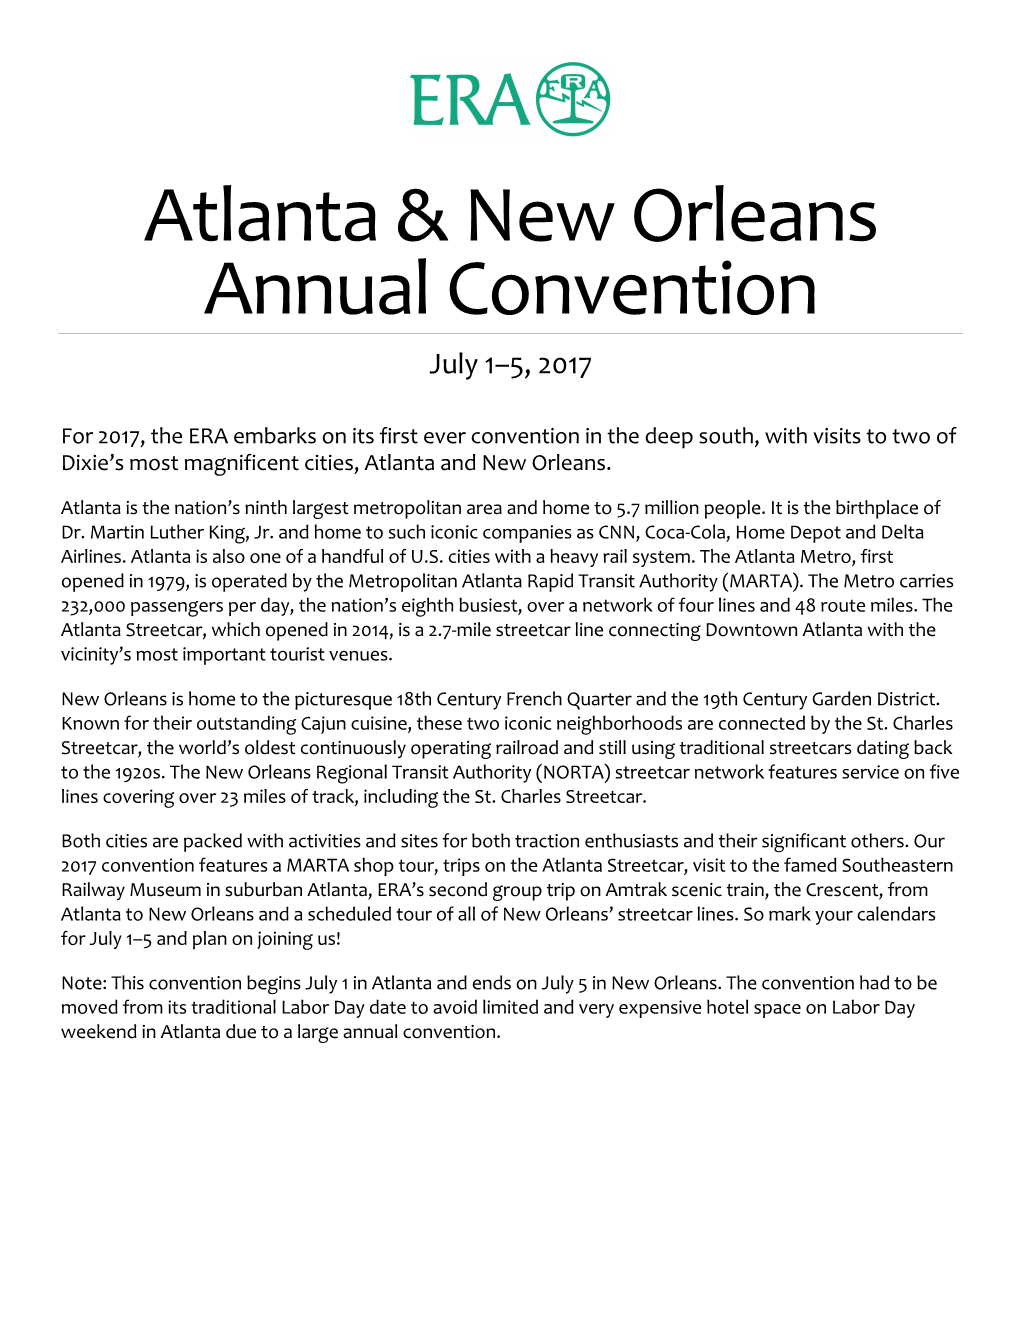 Atlanta & New Orleans Annual Convention